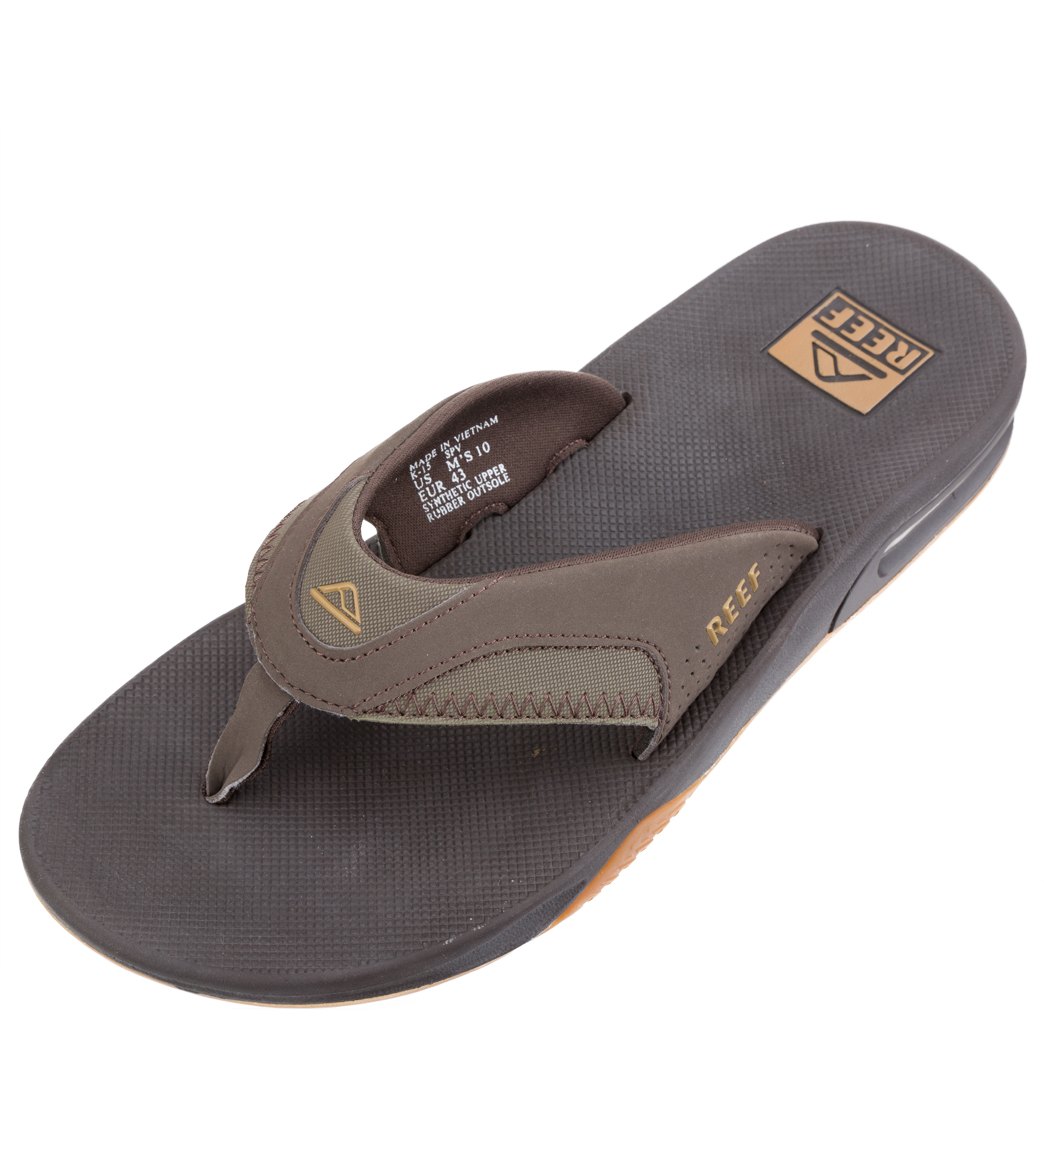 Reef Men's Fanning Sandals - Brown/Gum 6 Leather/Rubber - Swimoutlet.com